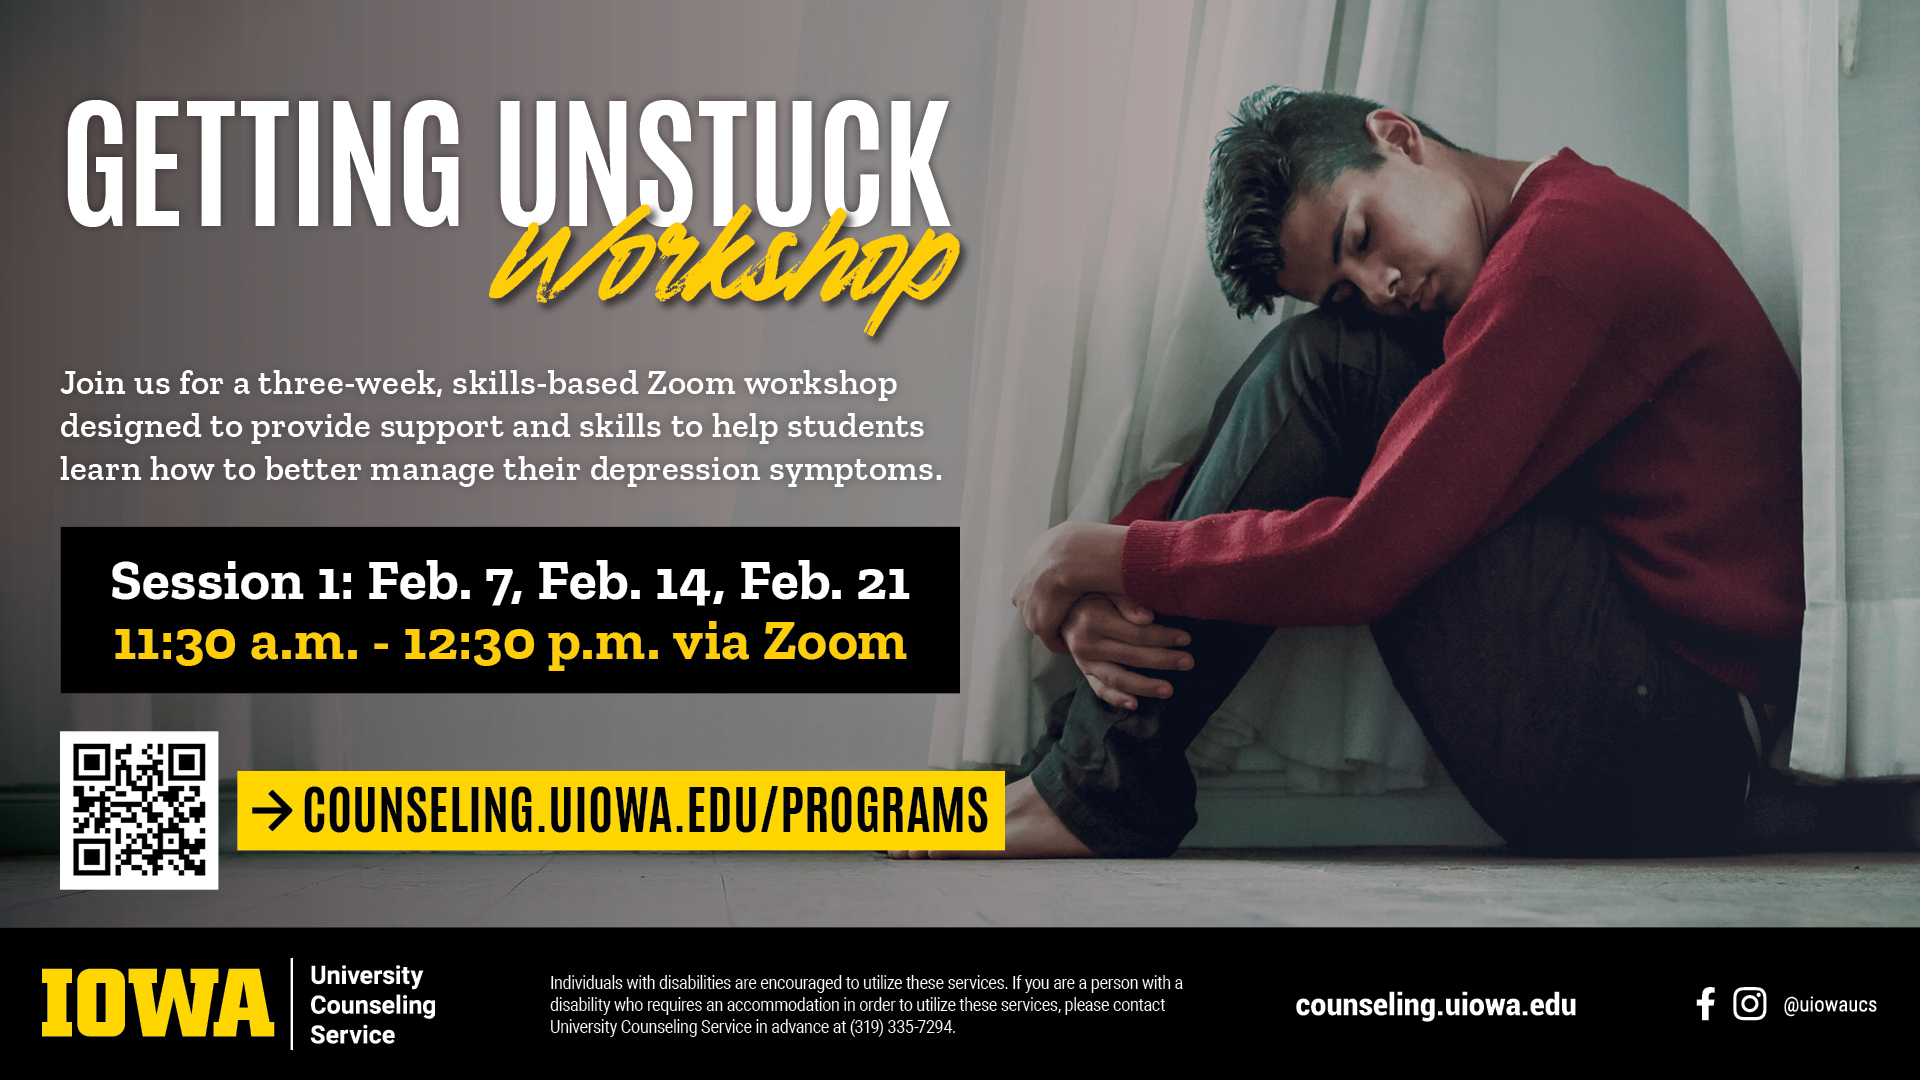 Getting Unstuck Workshop Session 1: feb 7, Feb 14, Feb 23, 11:30am-12:30pm via zoom